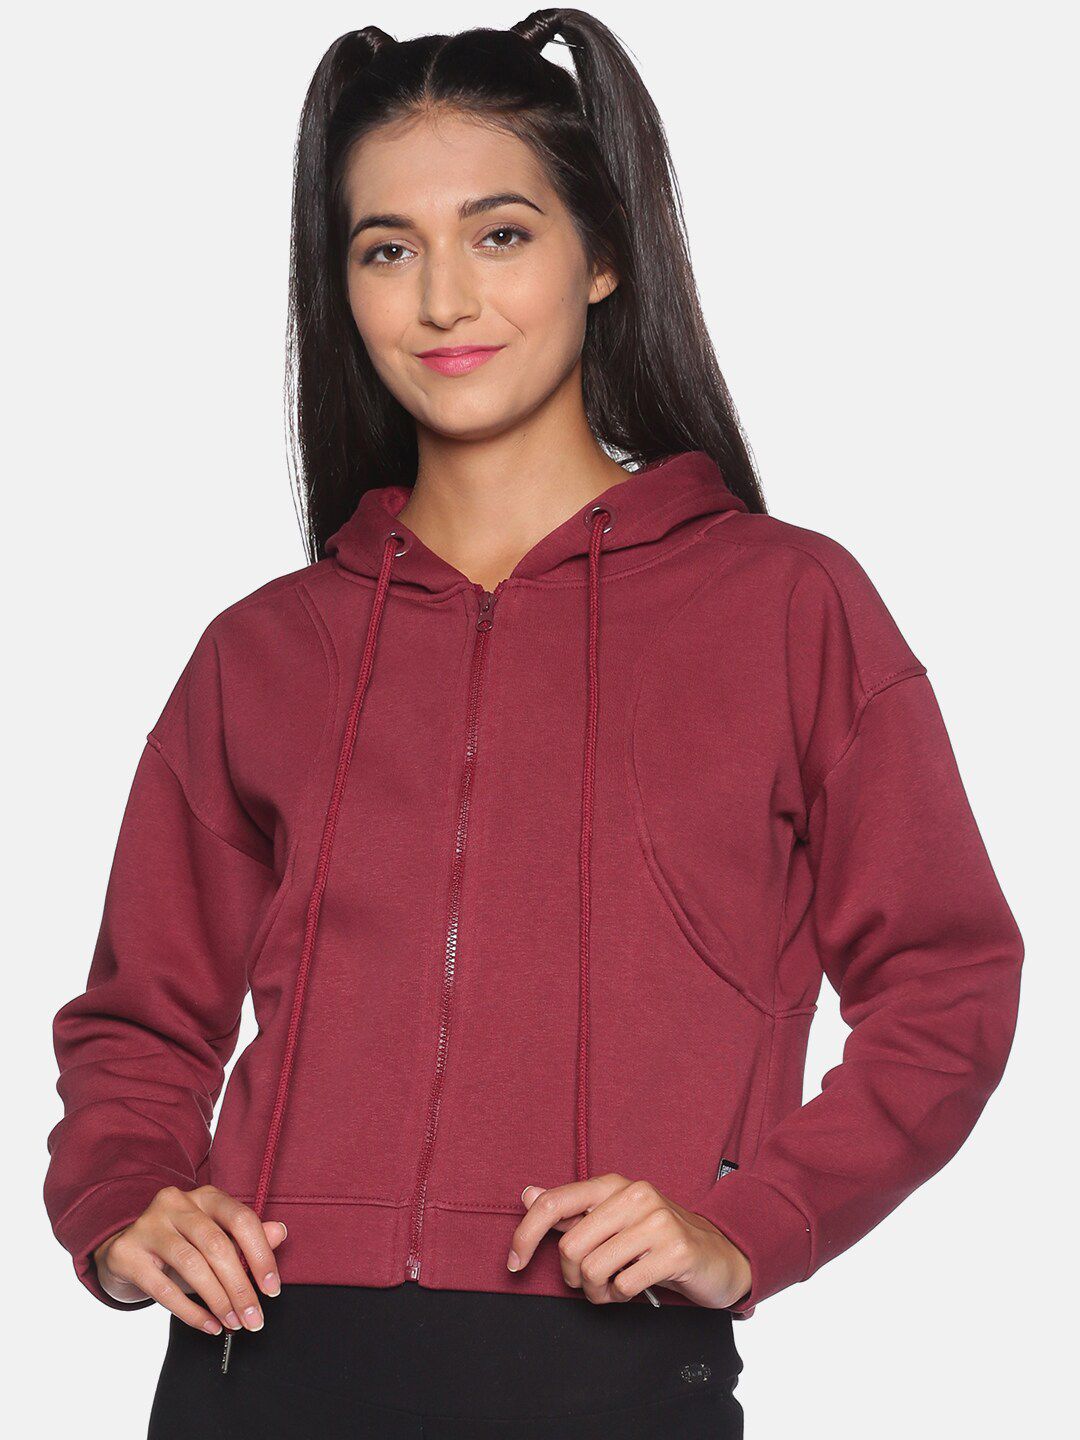 Campus Sutra Women Maroon Solid Hooded Sweatshirt Price in India